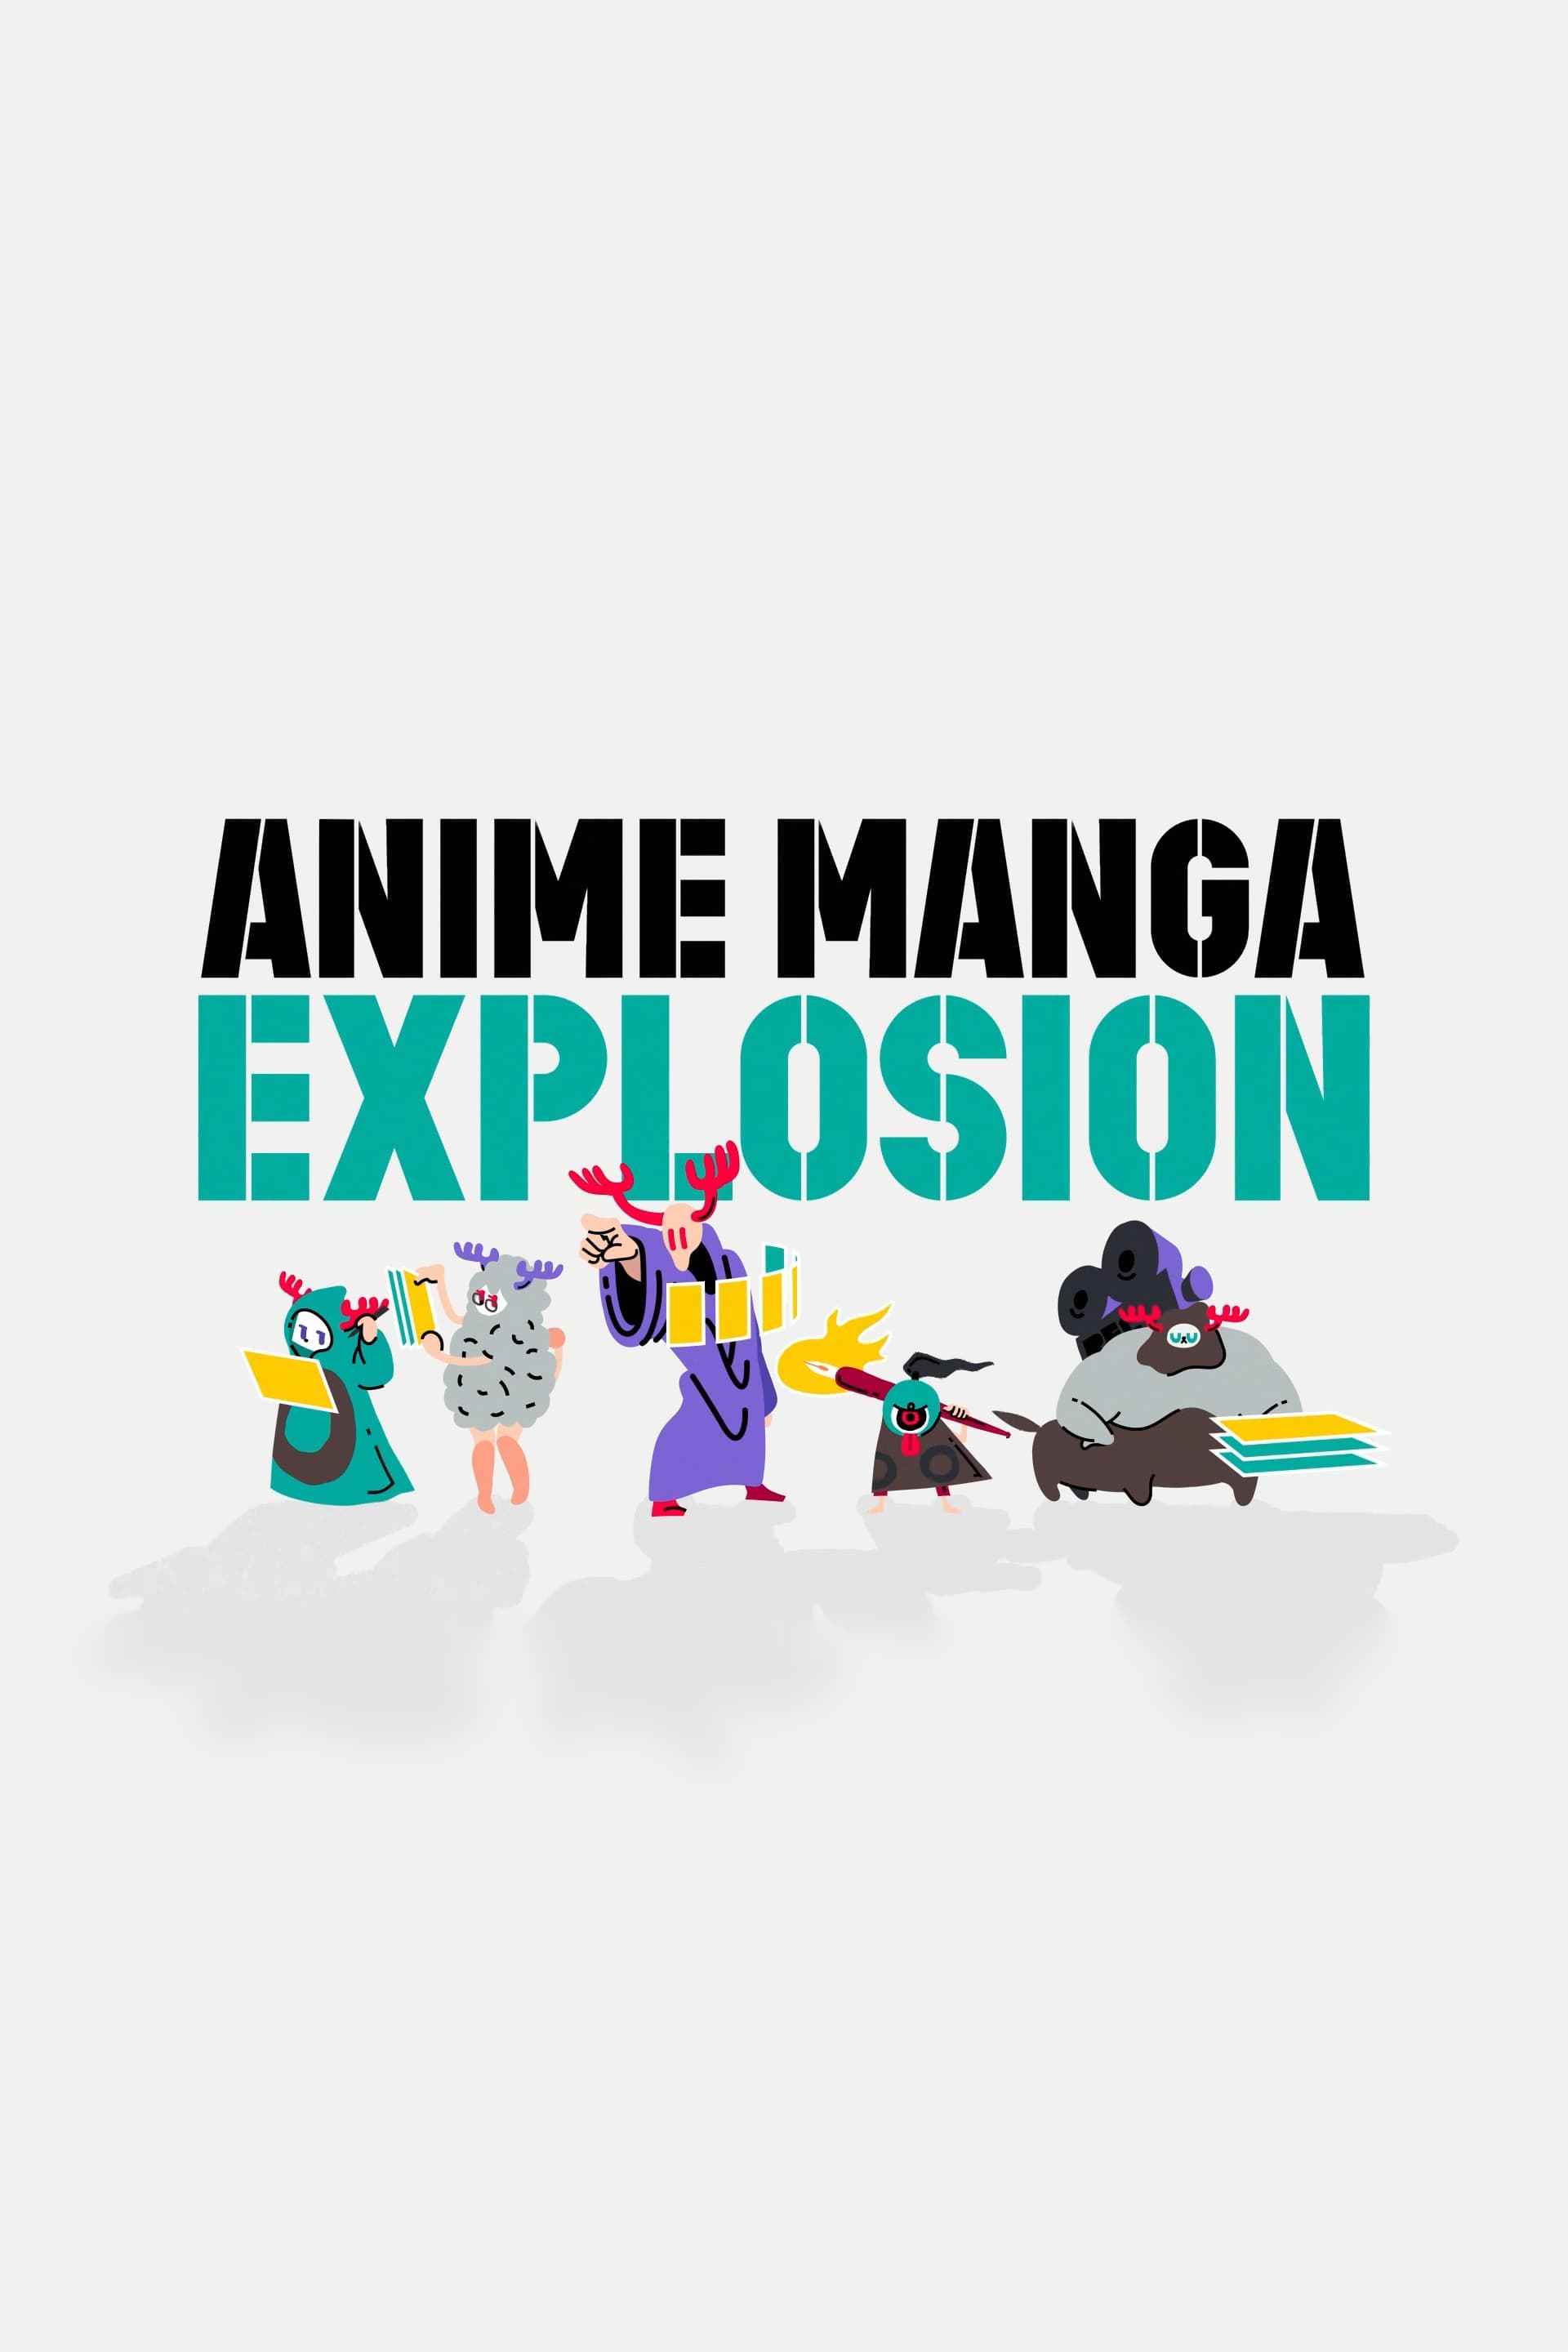 ANIME MANGA EXPLOSION TV Shows About Manga